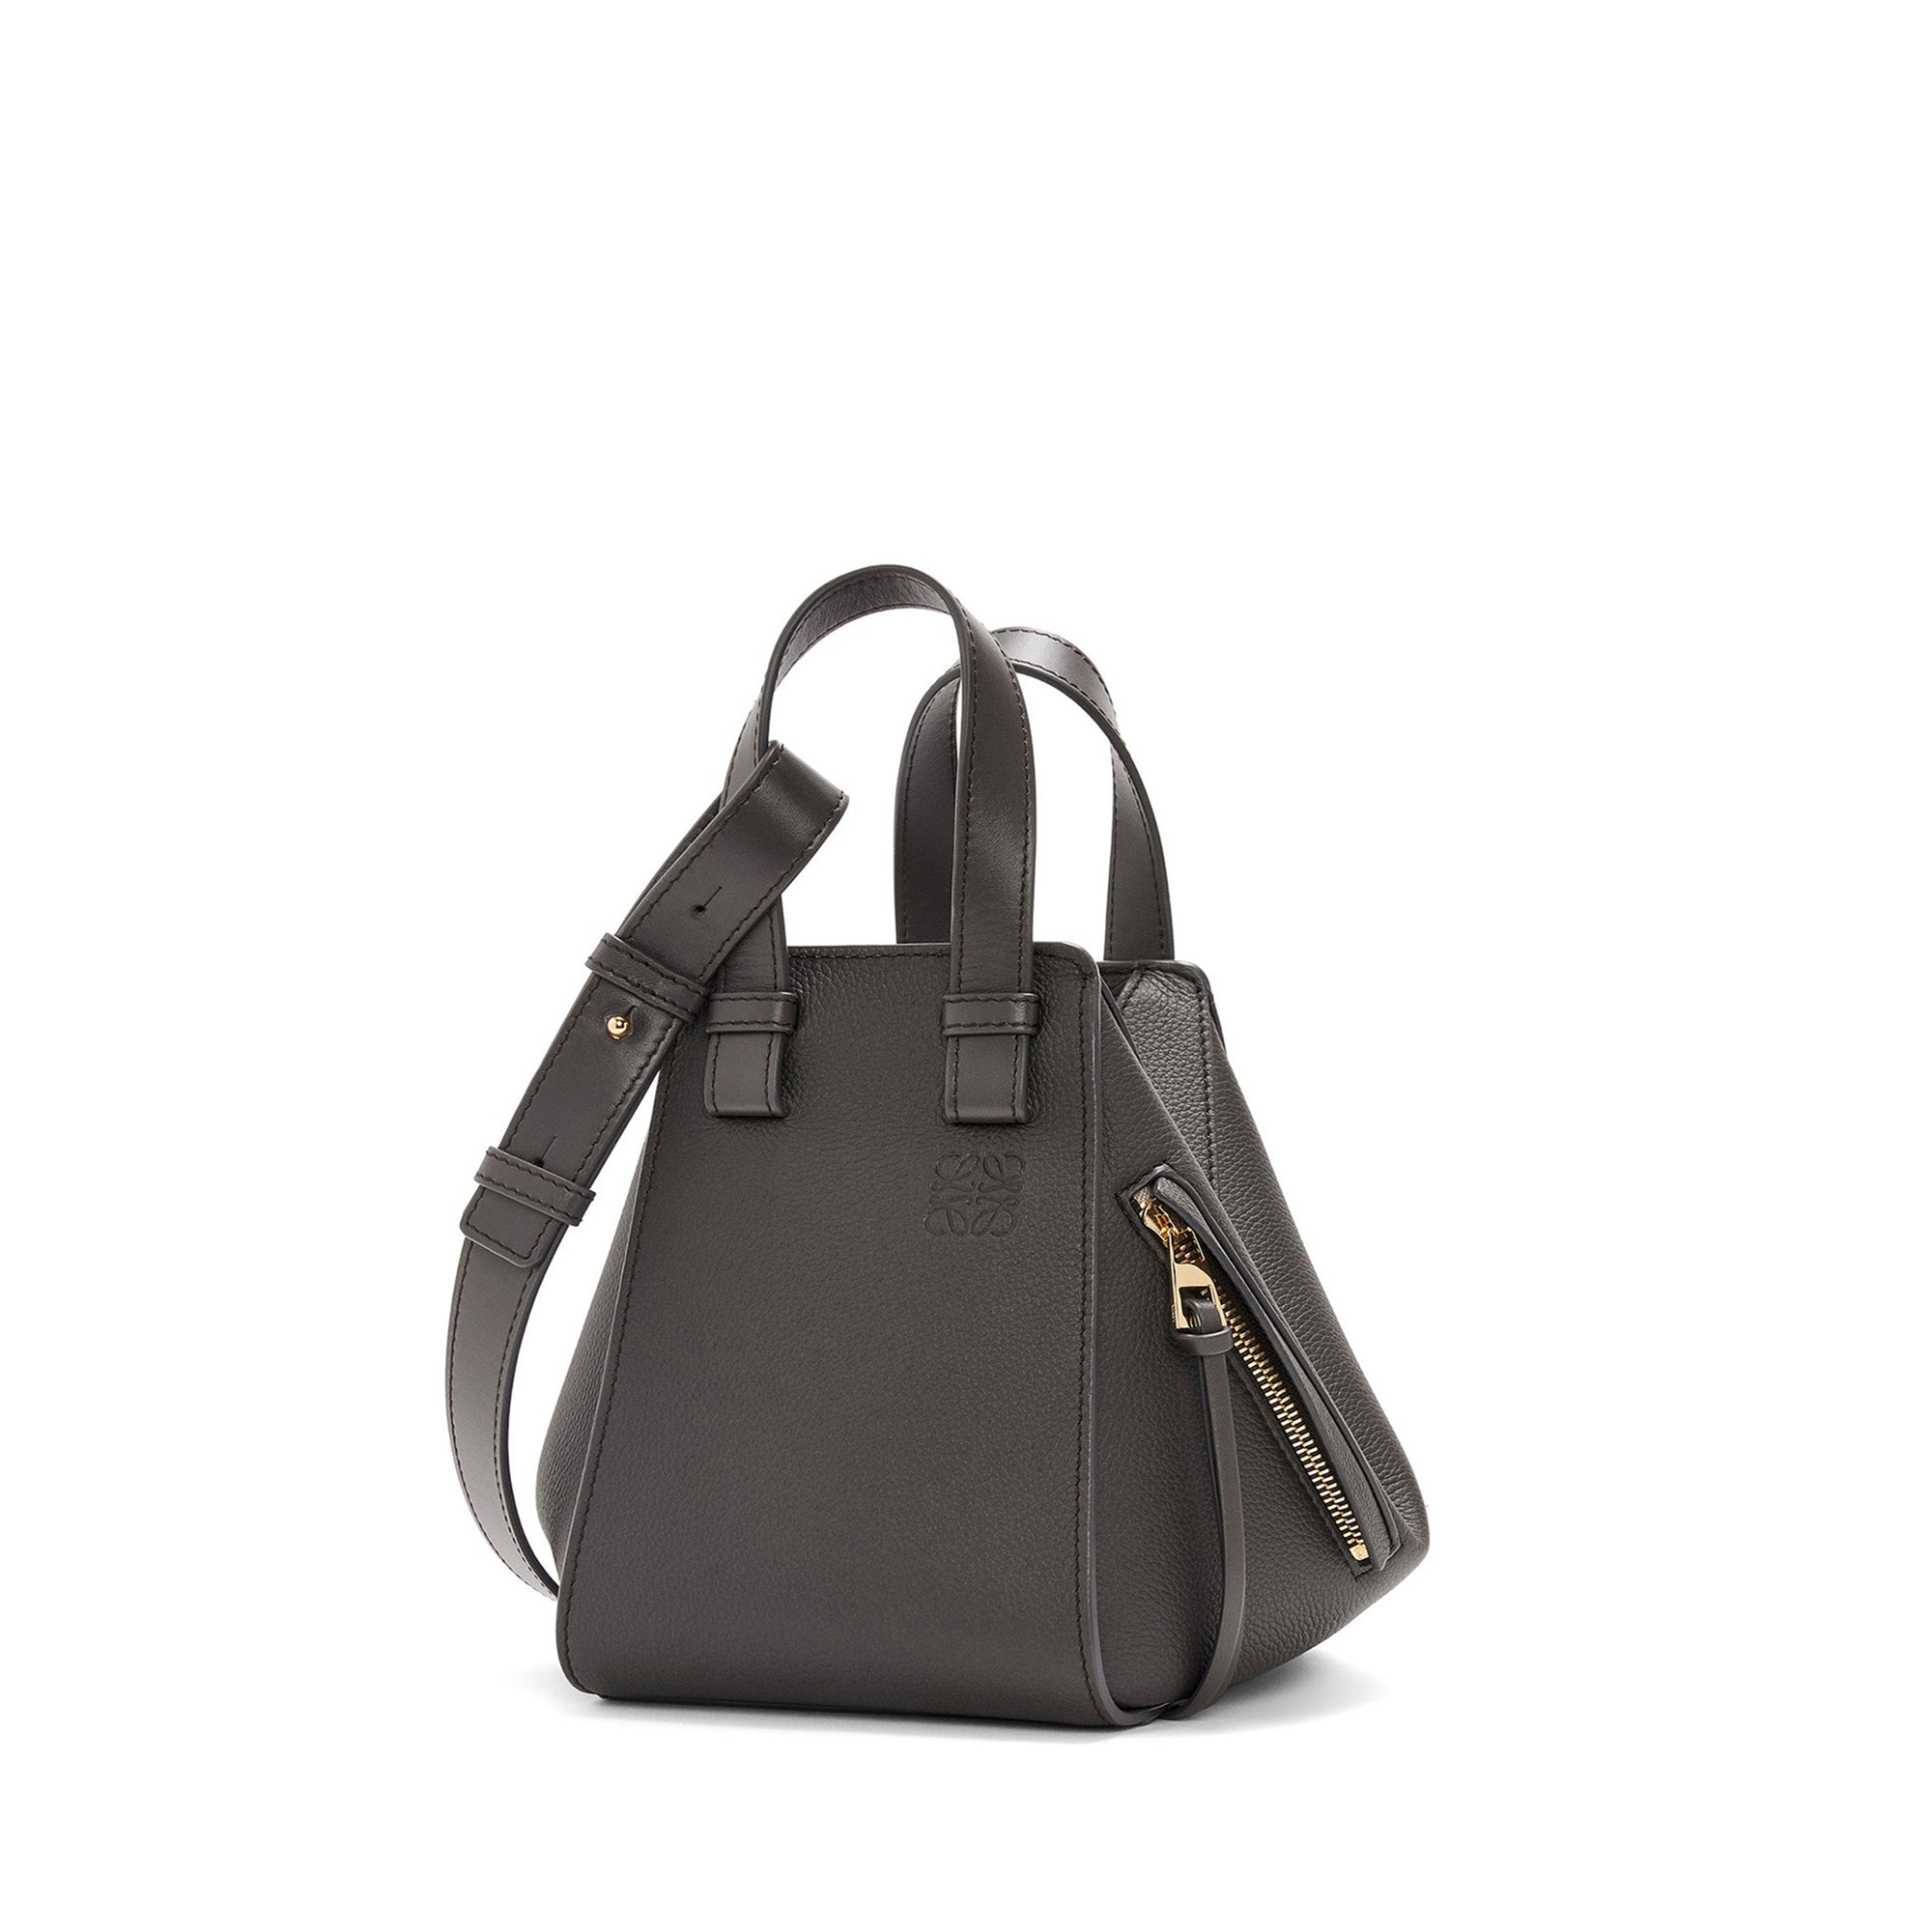 Loewe - Women's Hammock Compact Bag - (Dark Grey) view 1